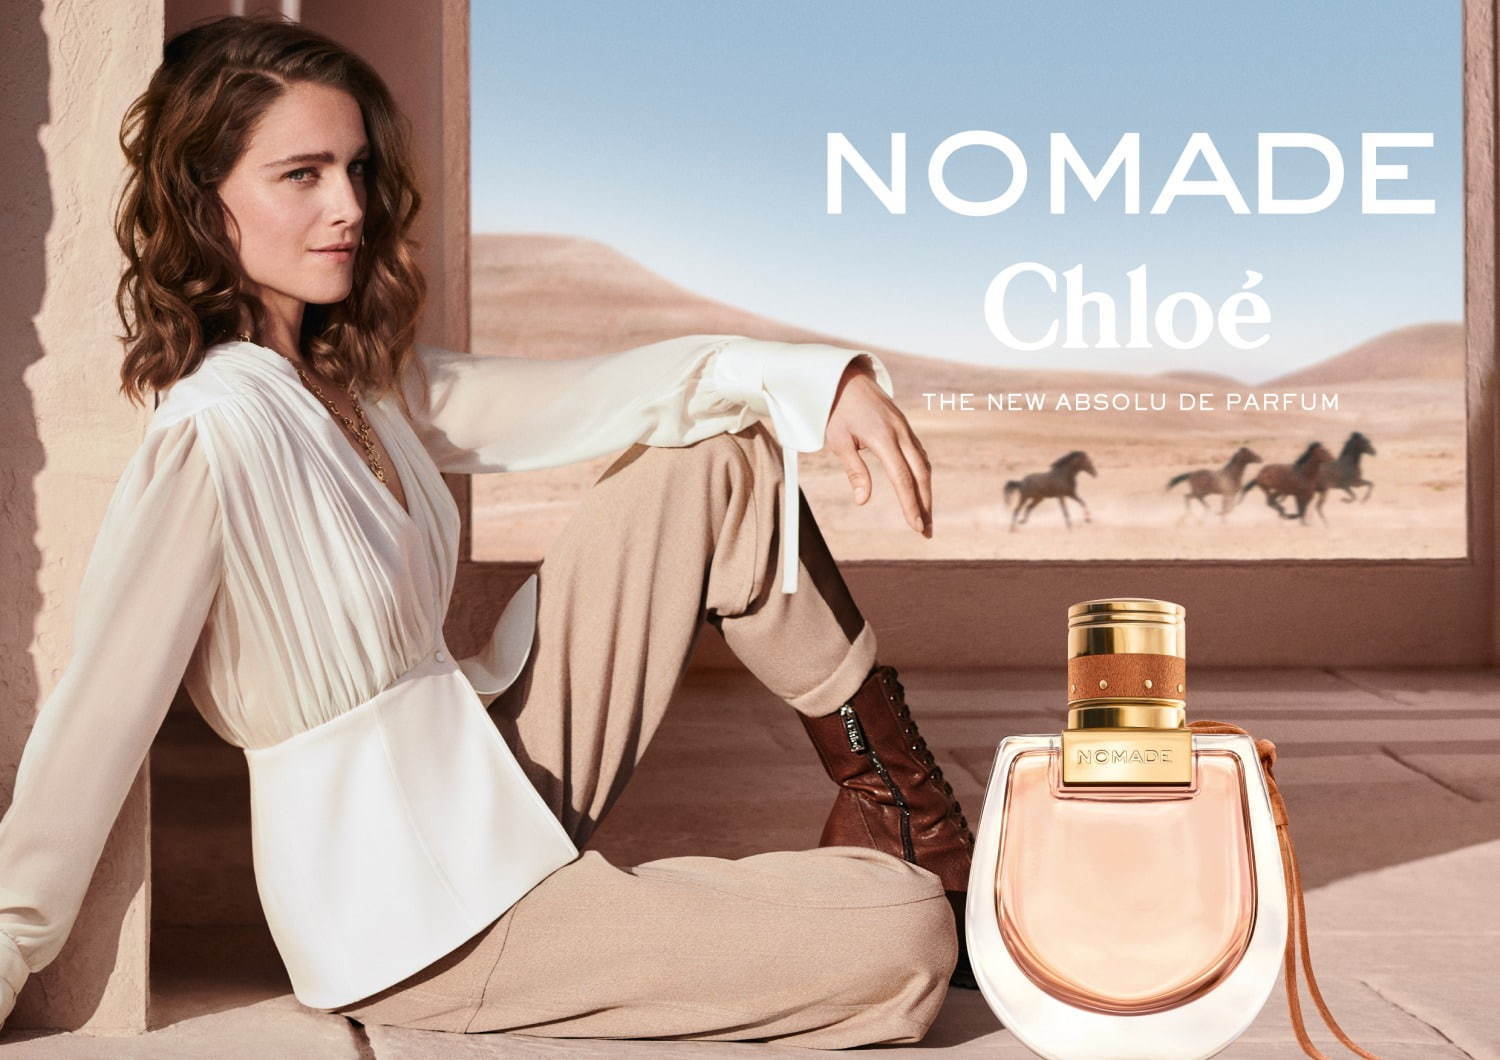 Nomade Absolu de Parfum Chloé аромат — новый аромат для женщин 2020